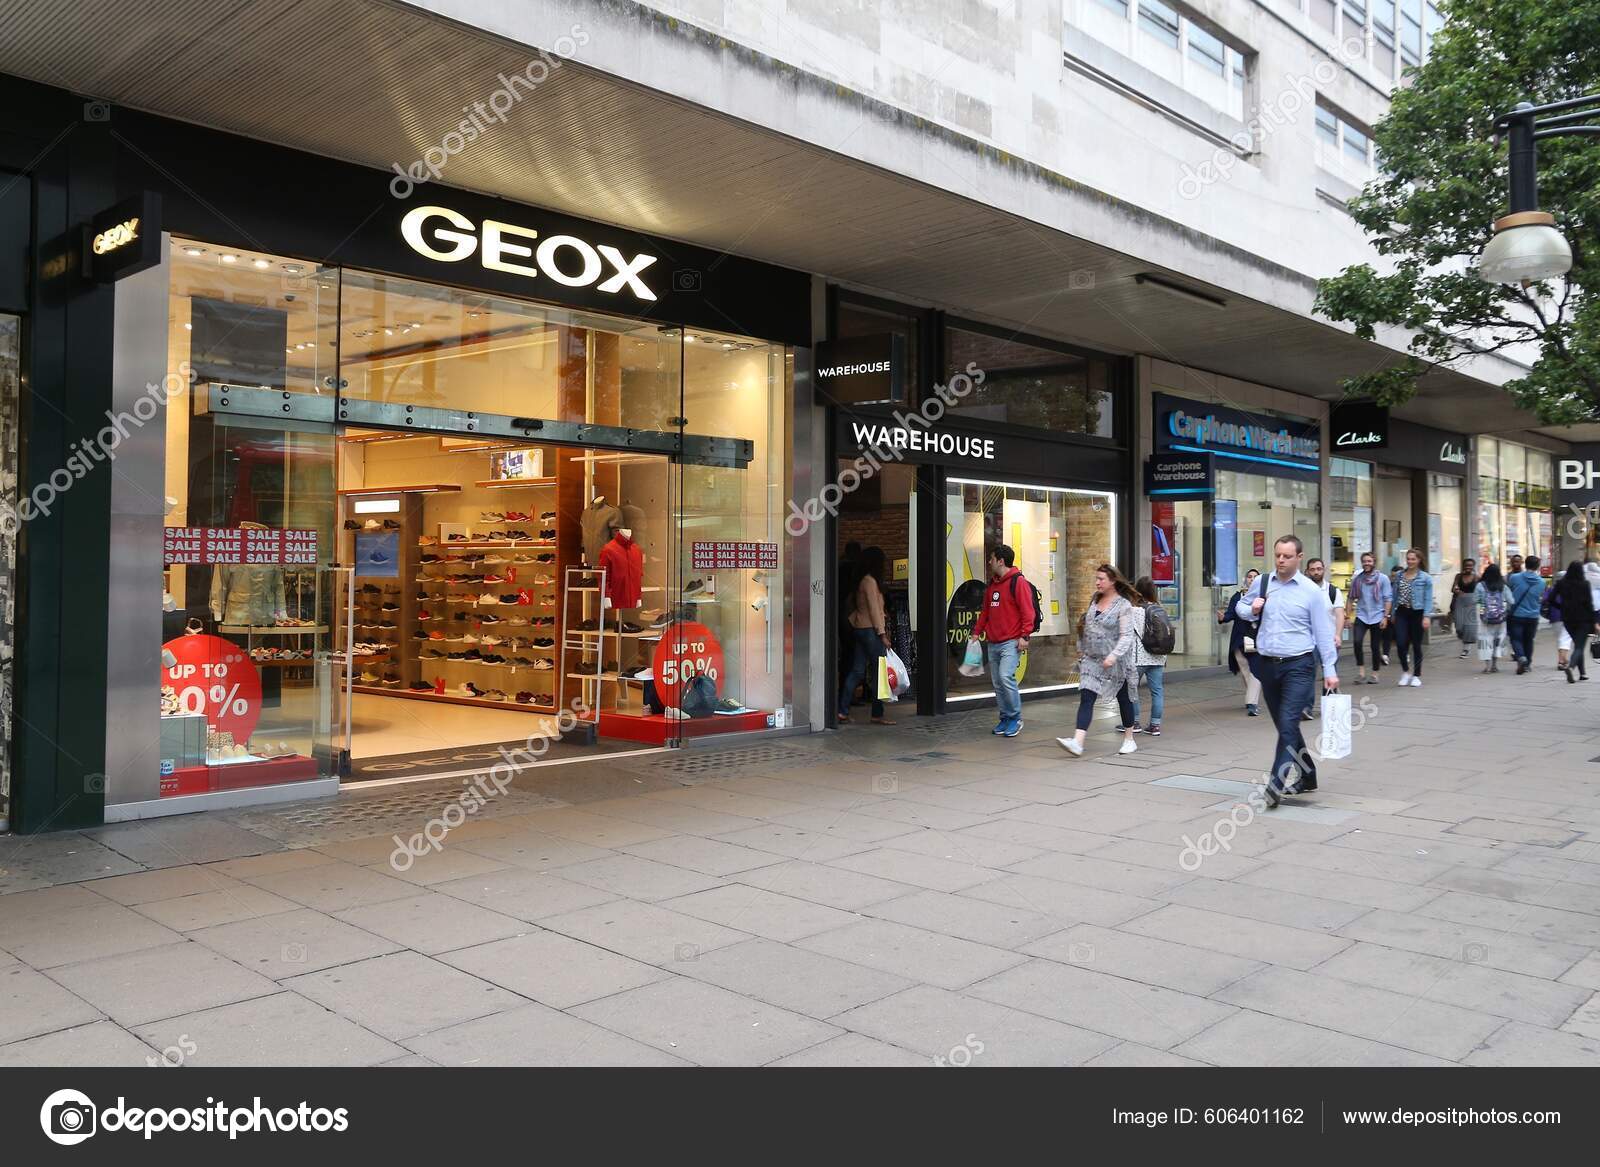 Geox Stock Photos, Royalty Free Geox Images | Depositphotos